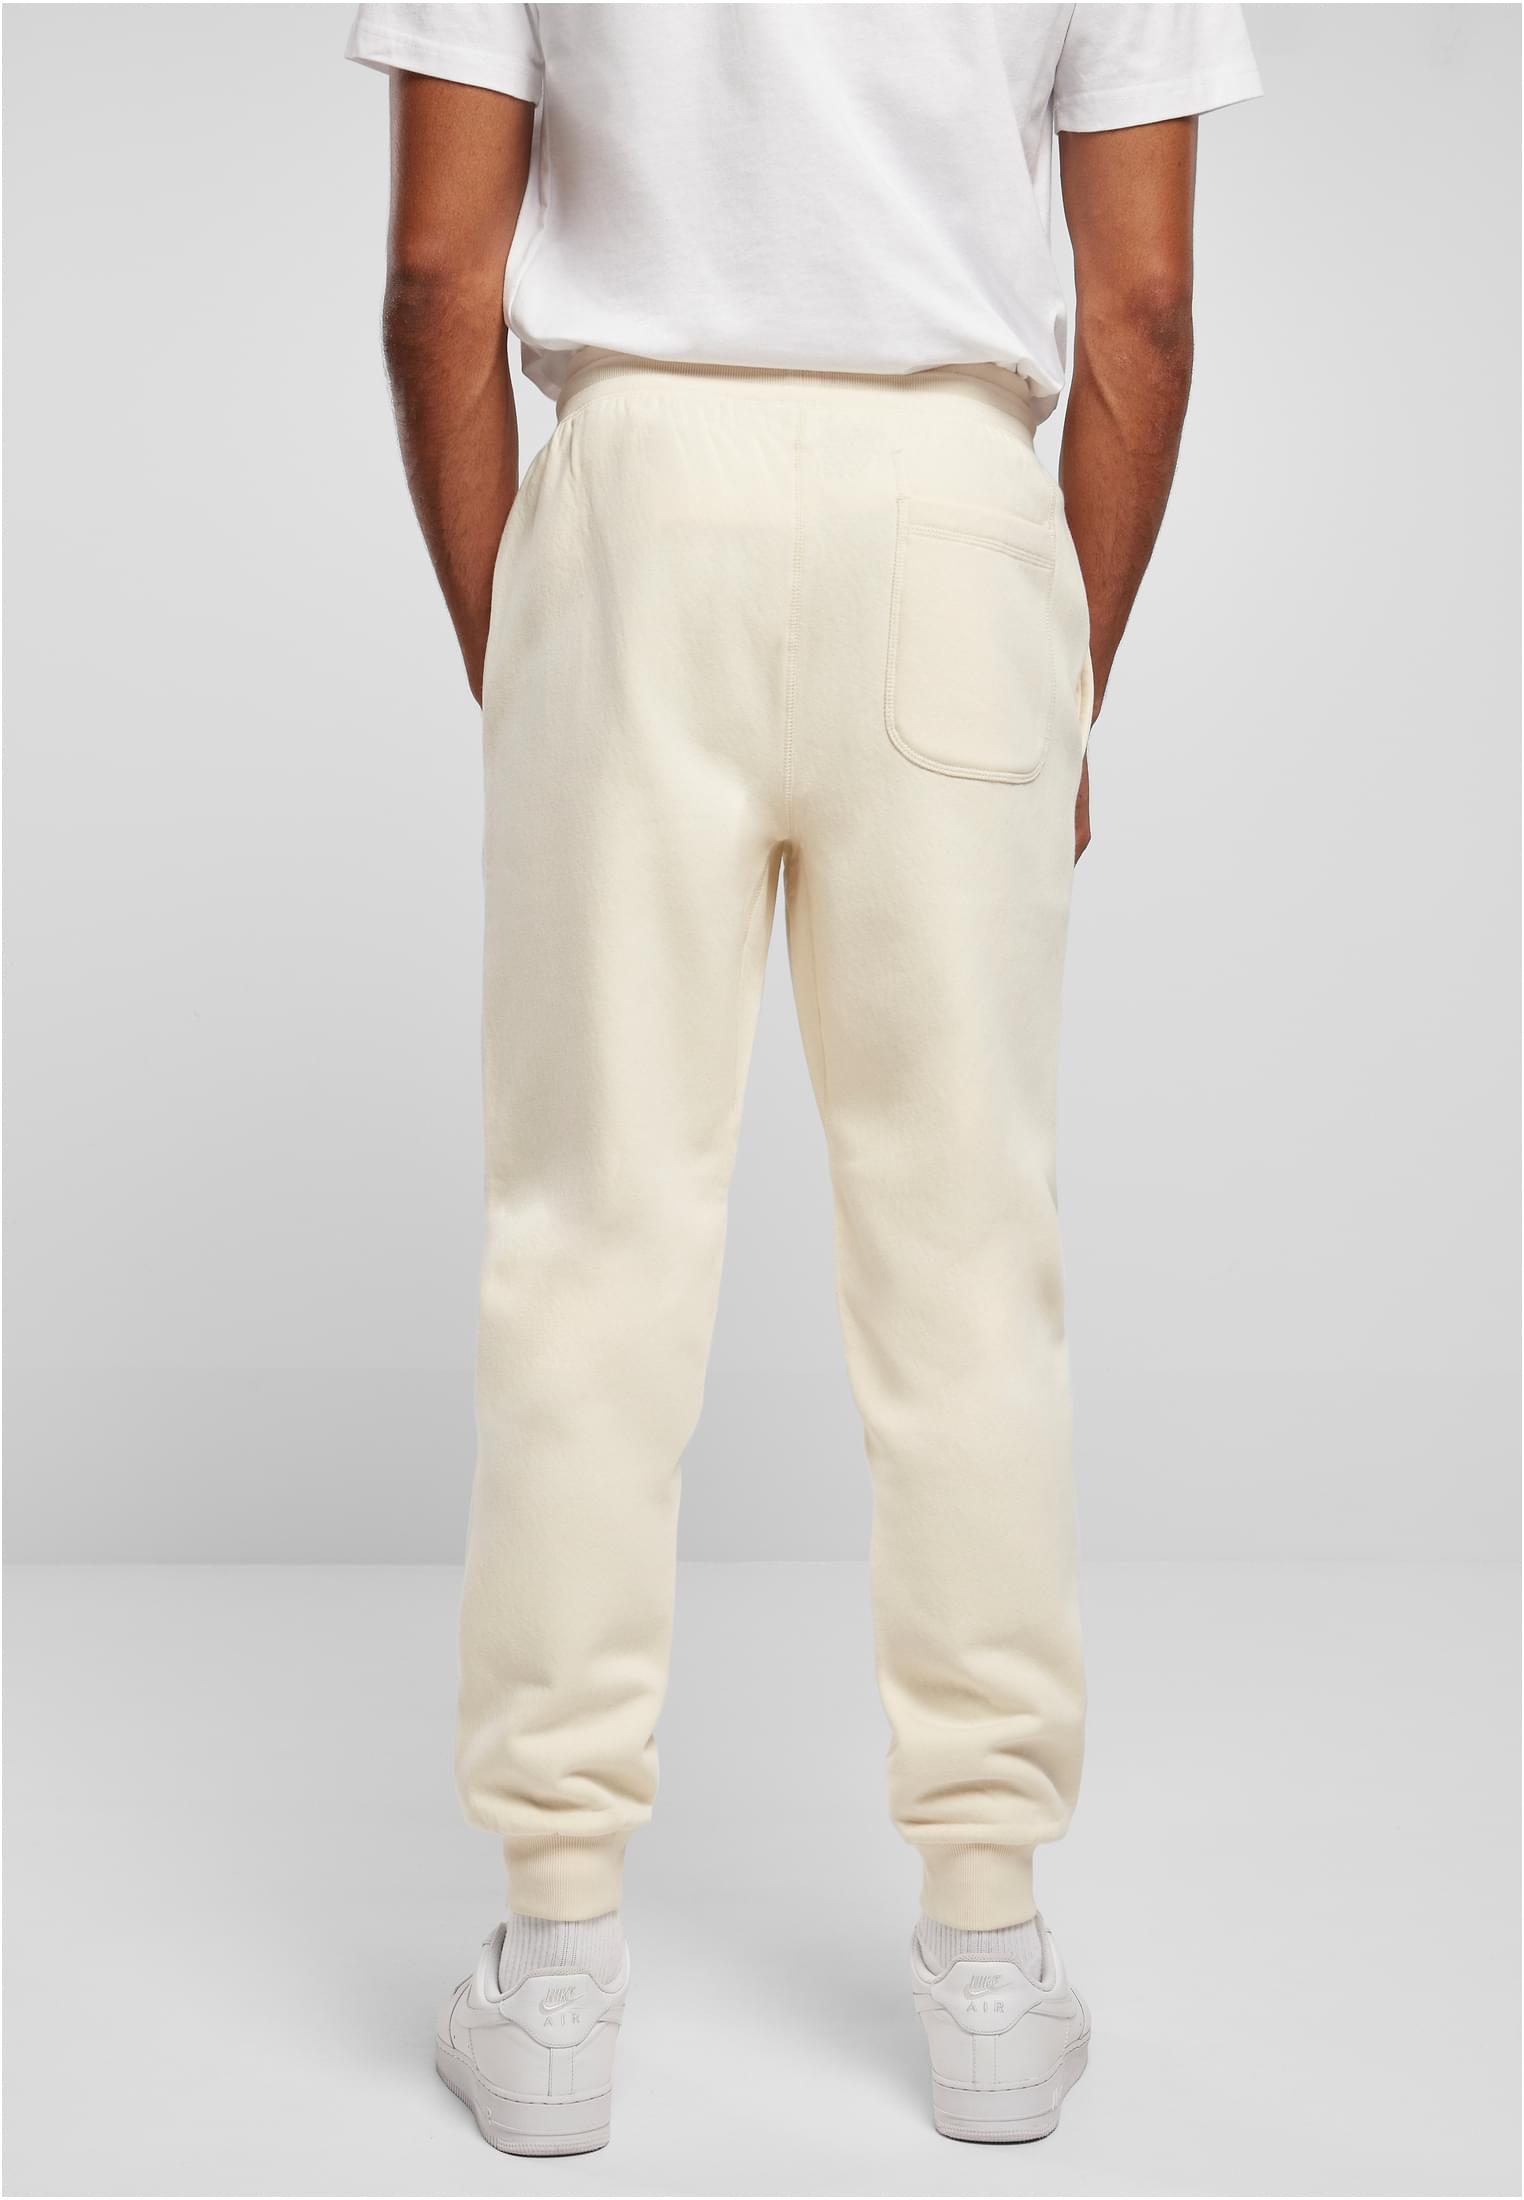 Herren Basic Sweatpants in Farbe whitesand